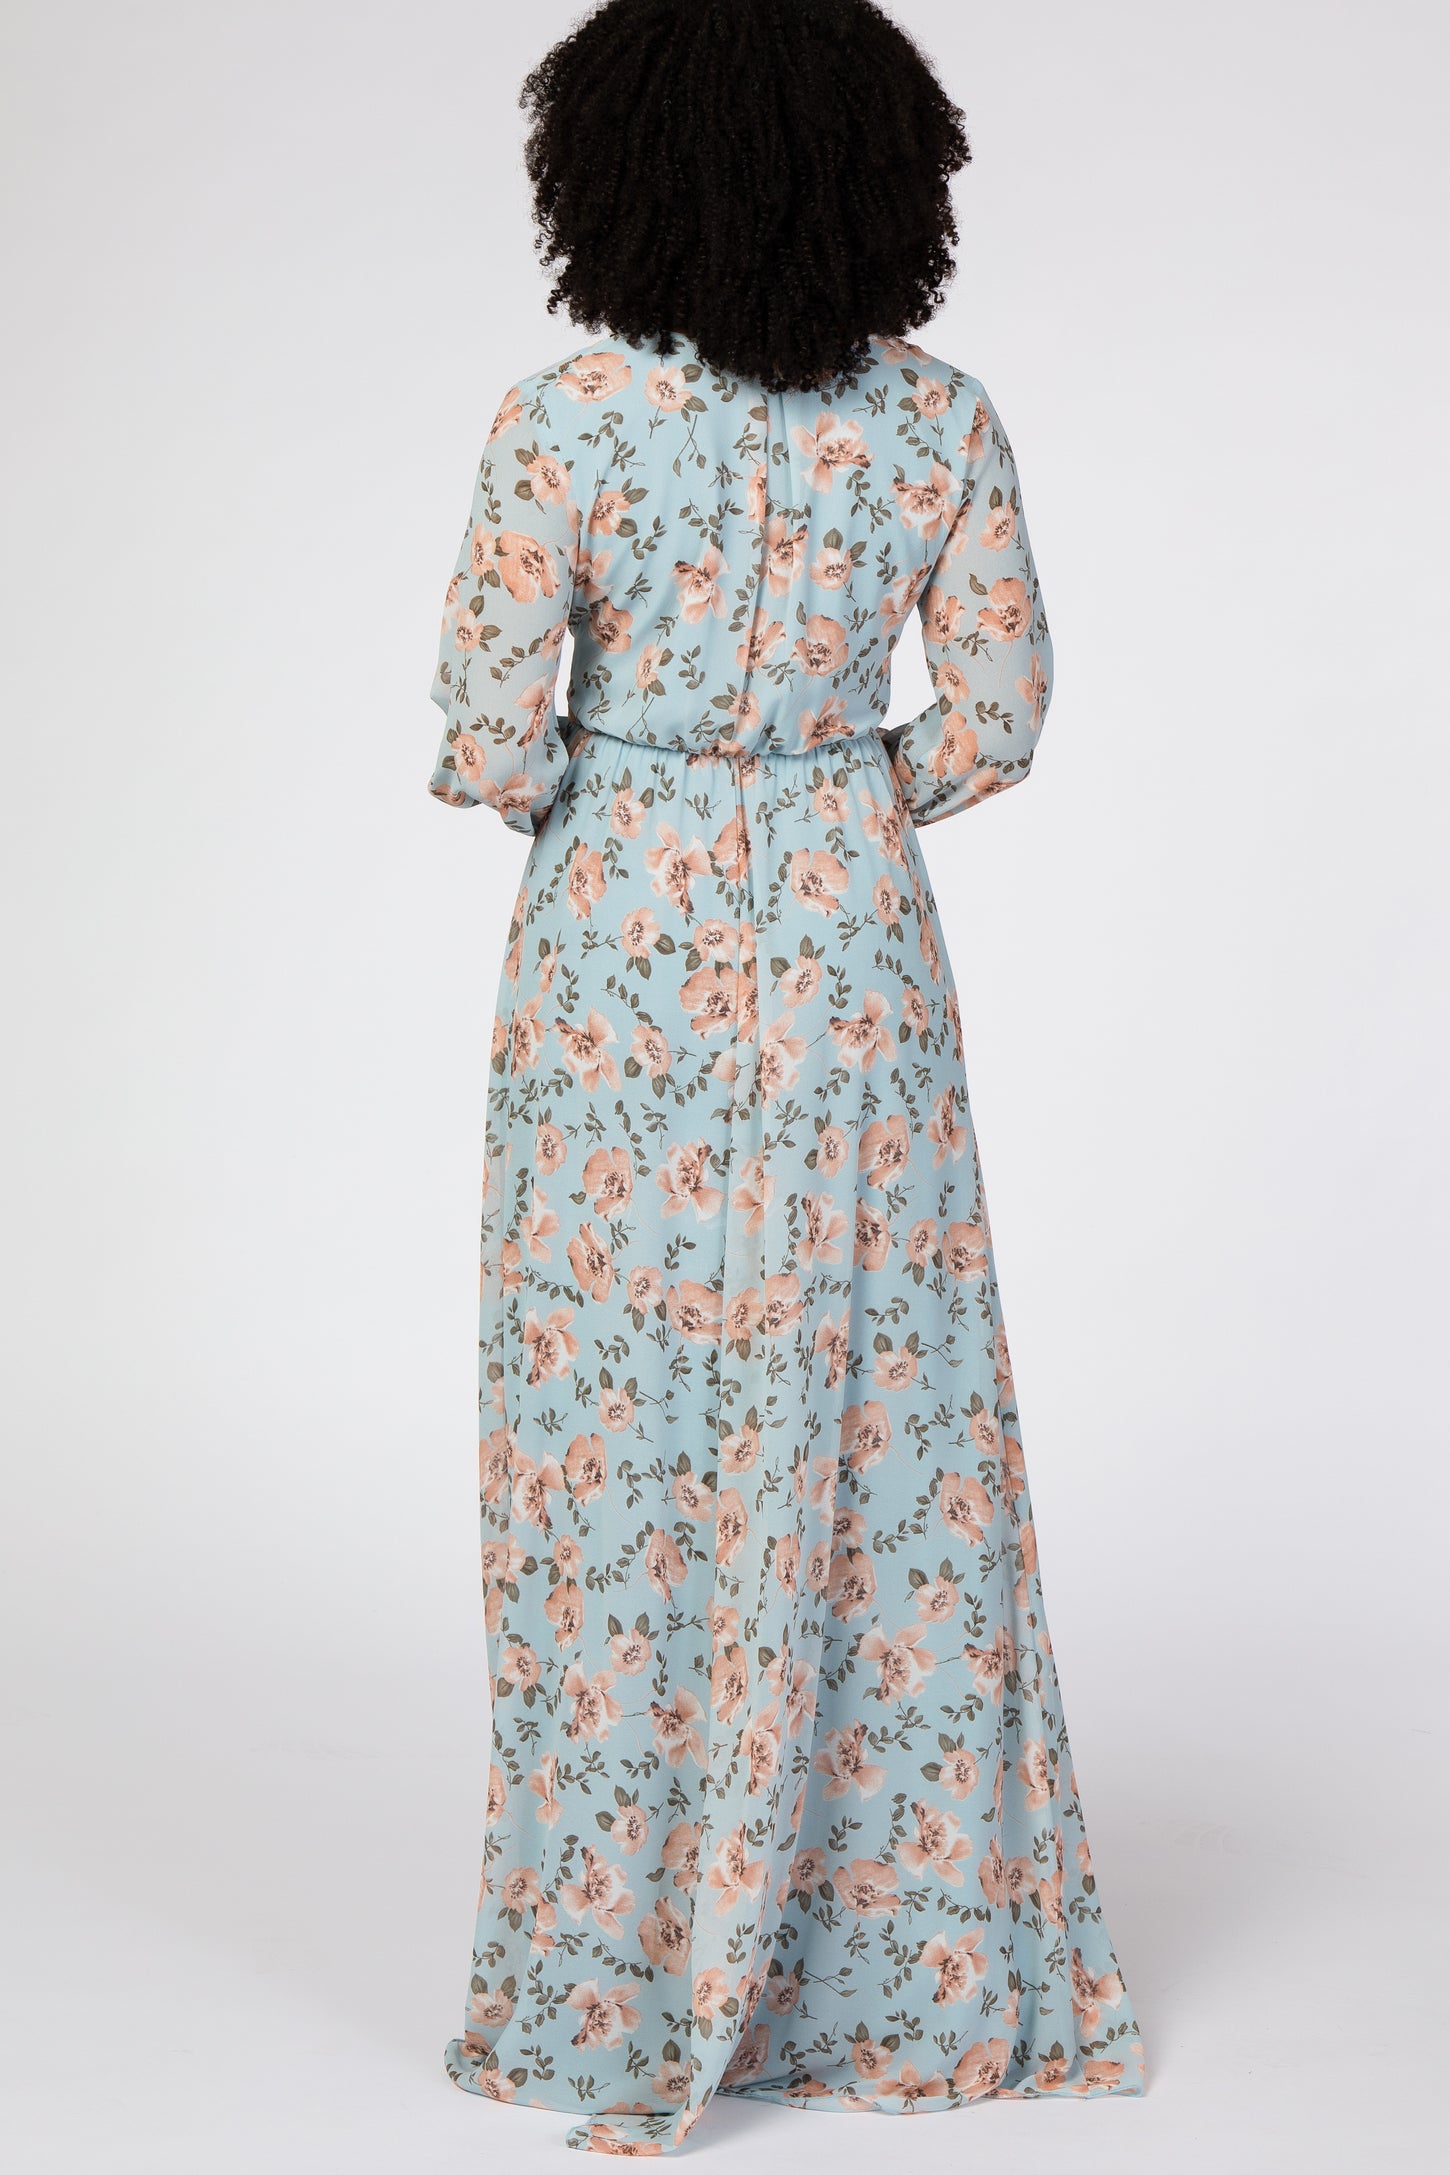 Blue Floral Chiffon Maxi Dress